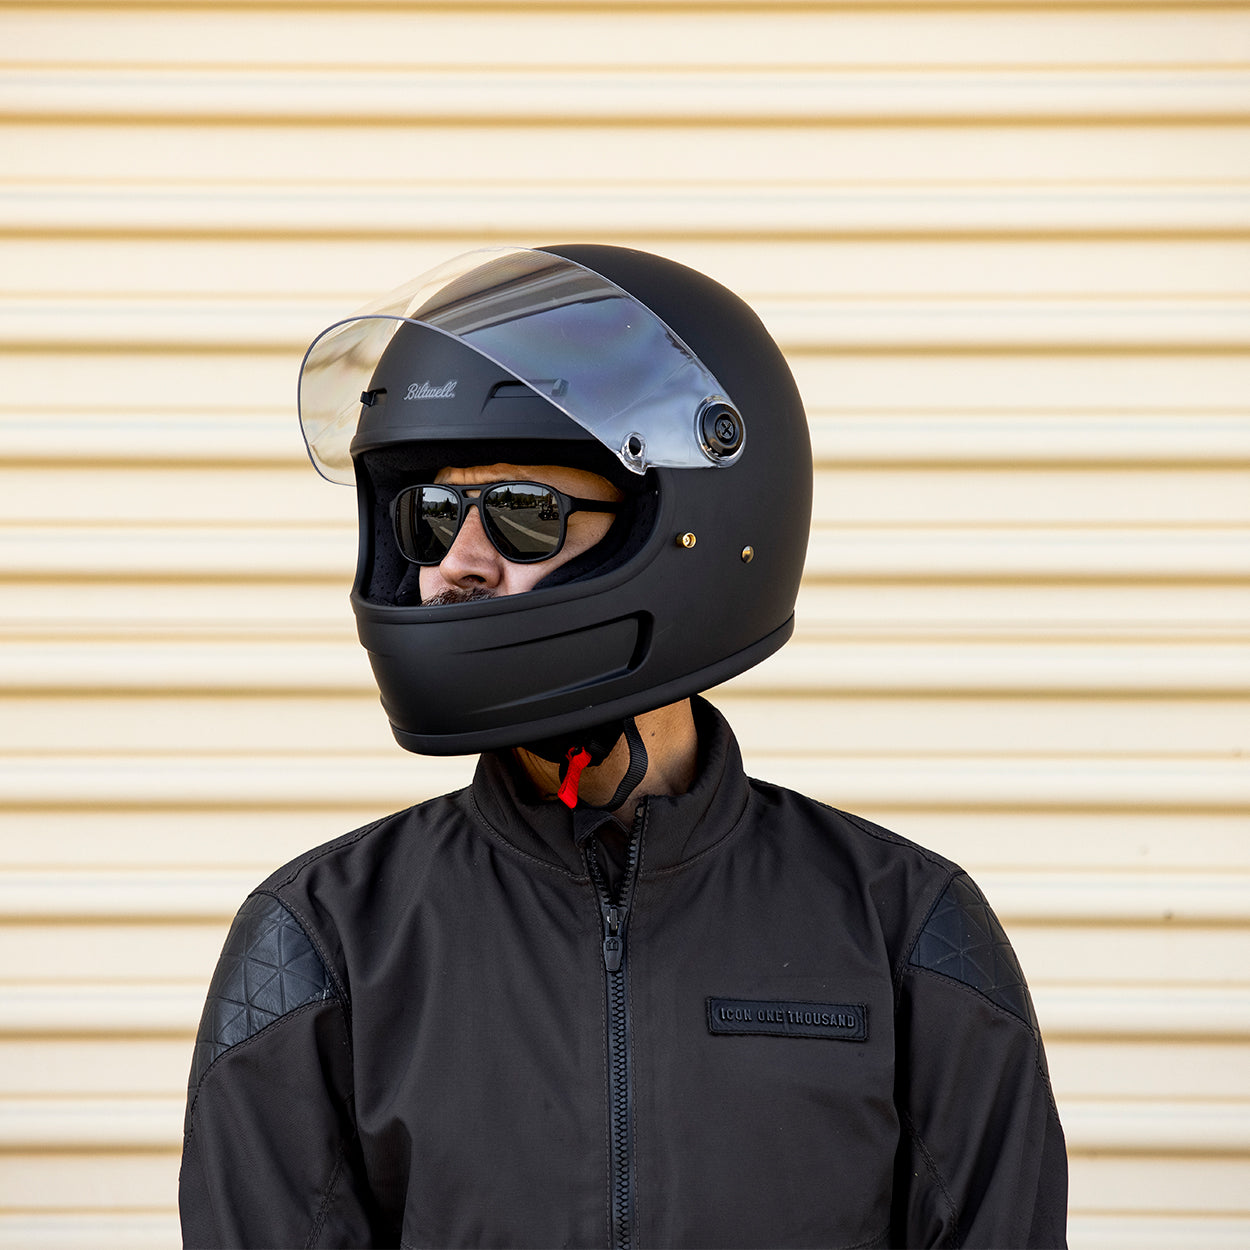 Gringo SV ECE R22.06 Helmet - Flat Black